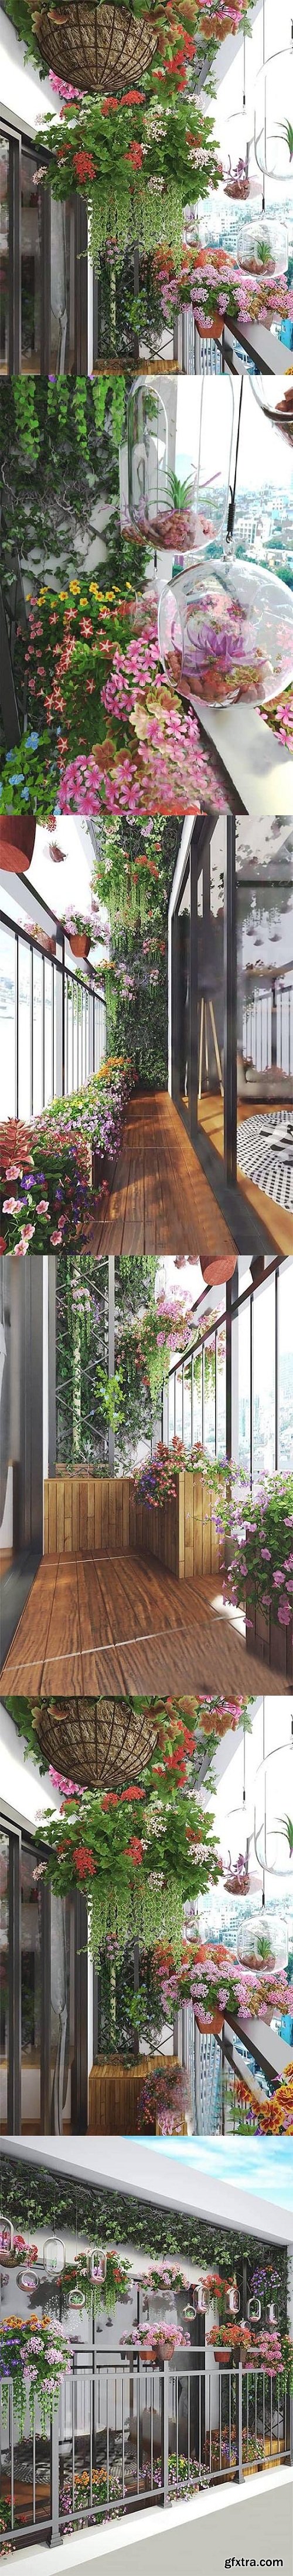 Flowers hanging balcony